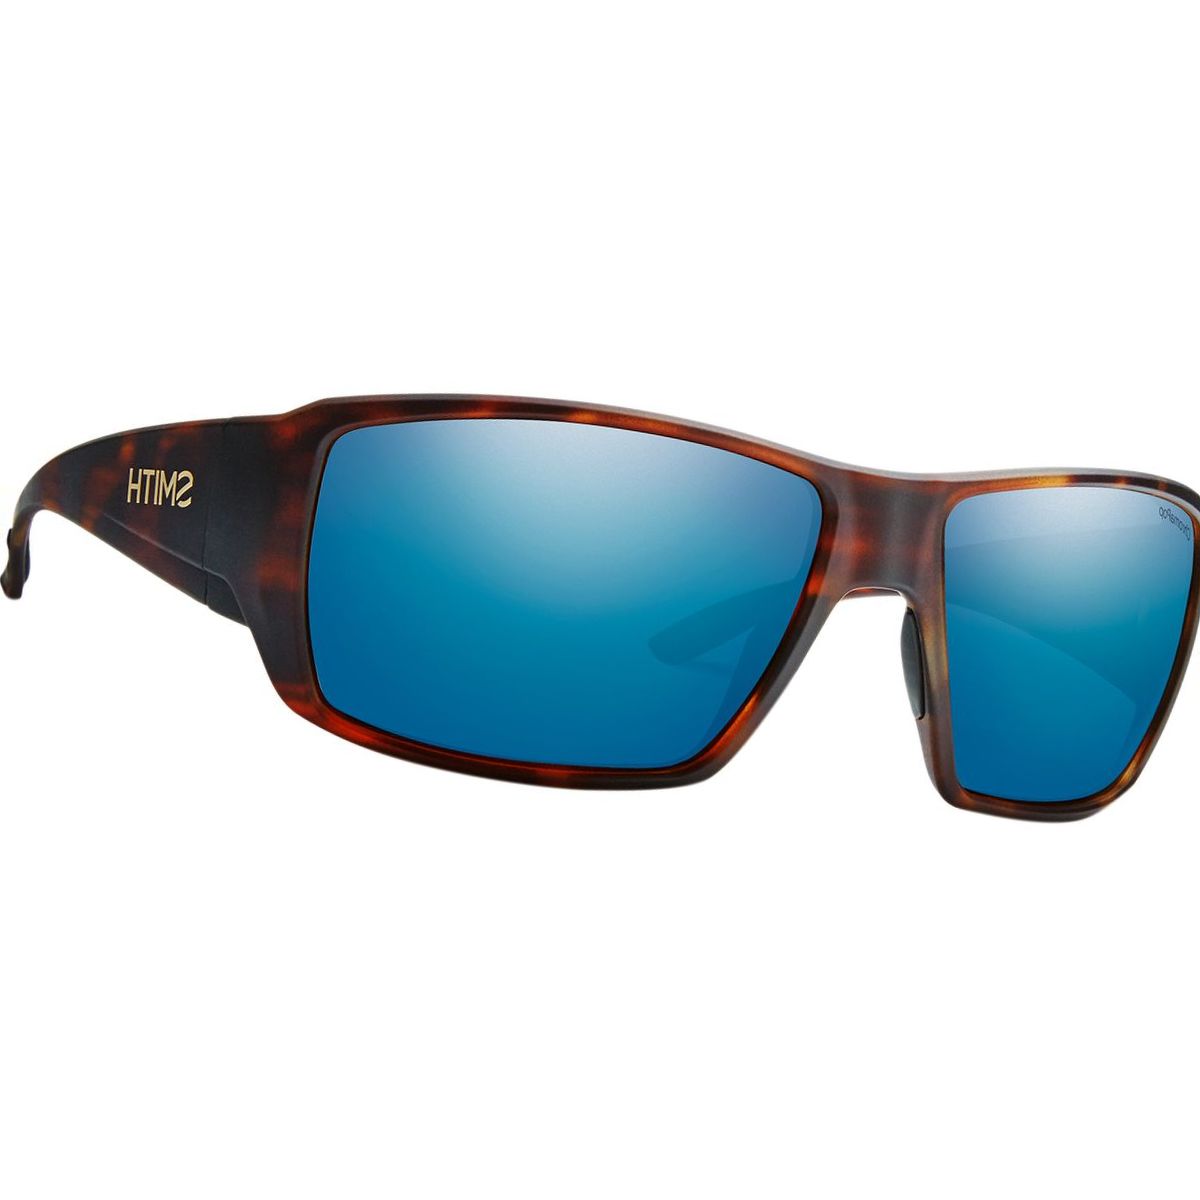 Smith Guide's Choice ChromaPop Glass Polarized Sunglasses - Men's